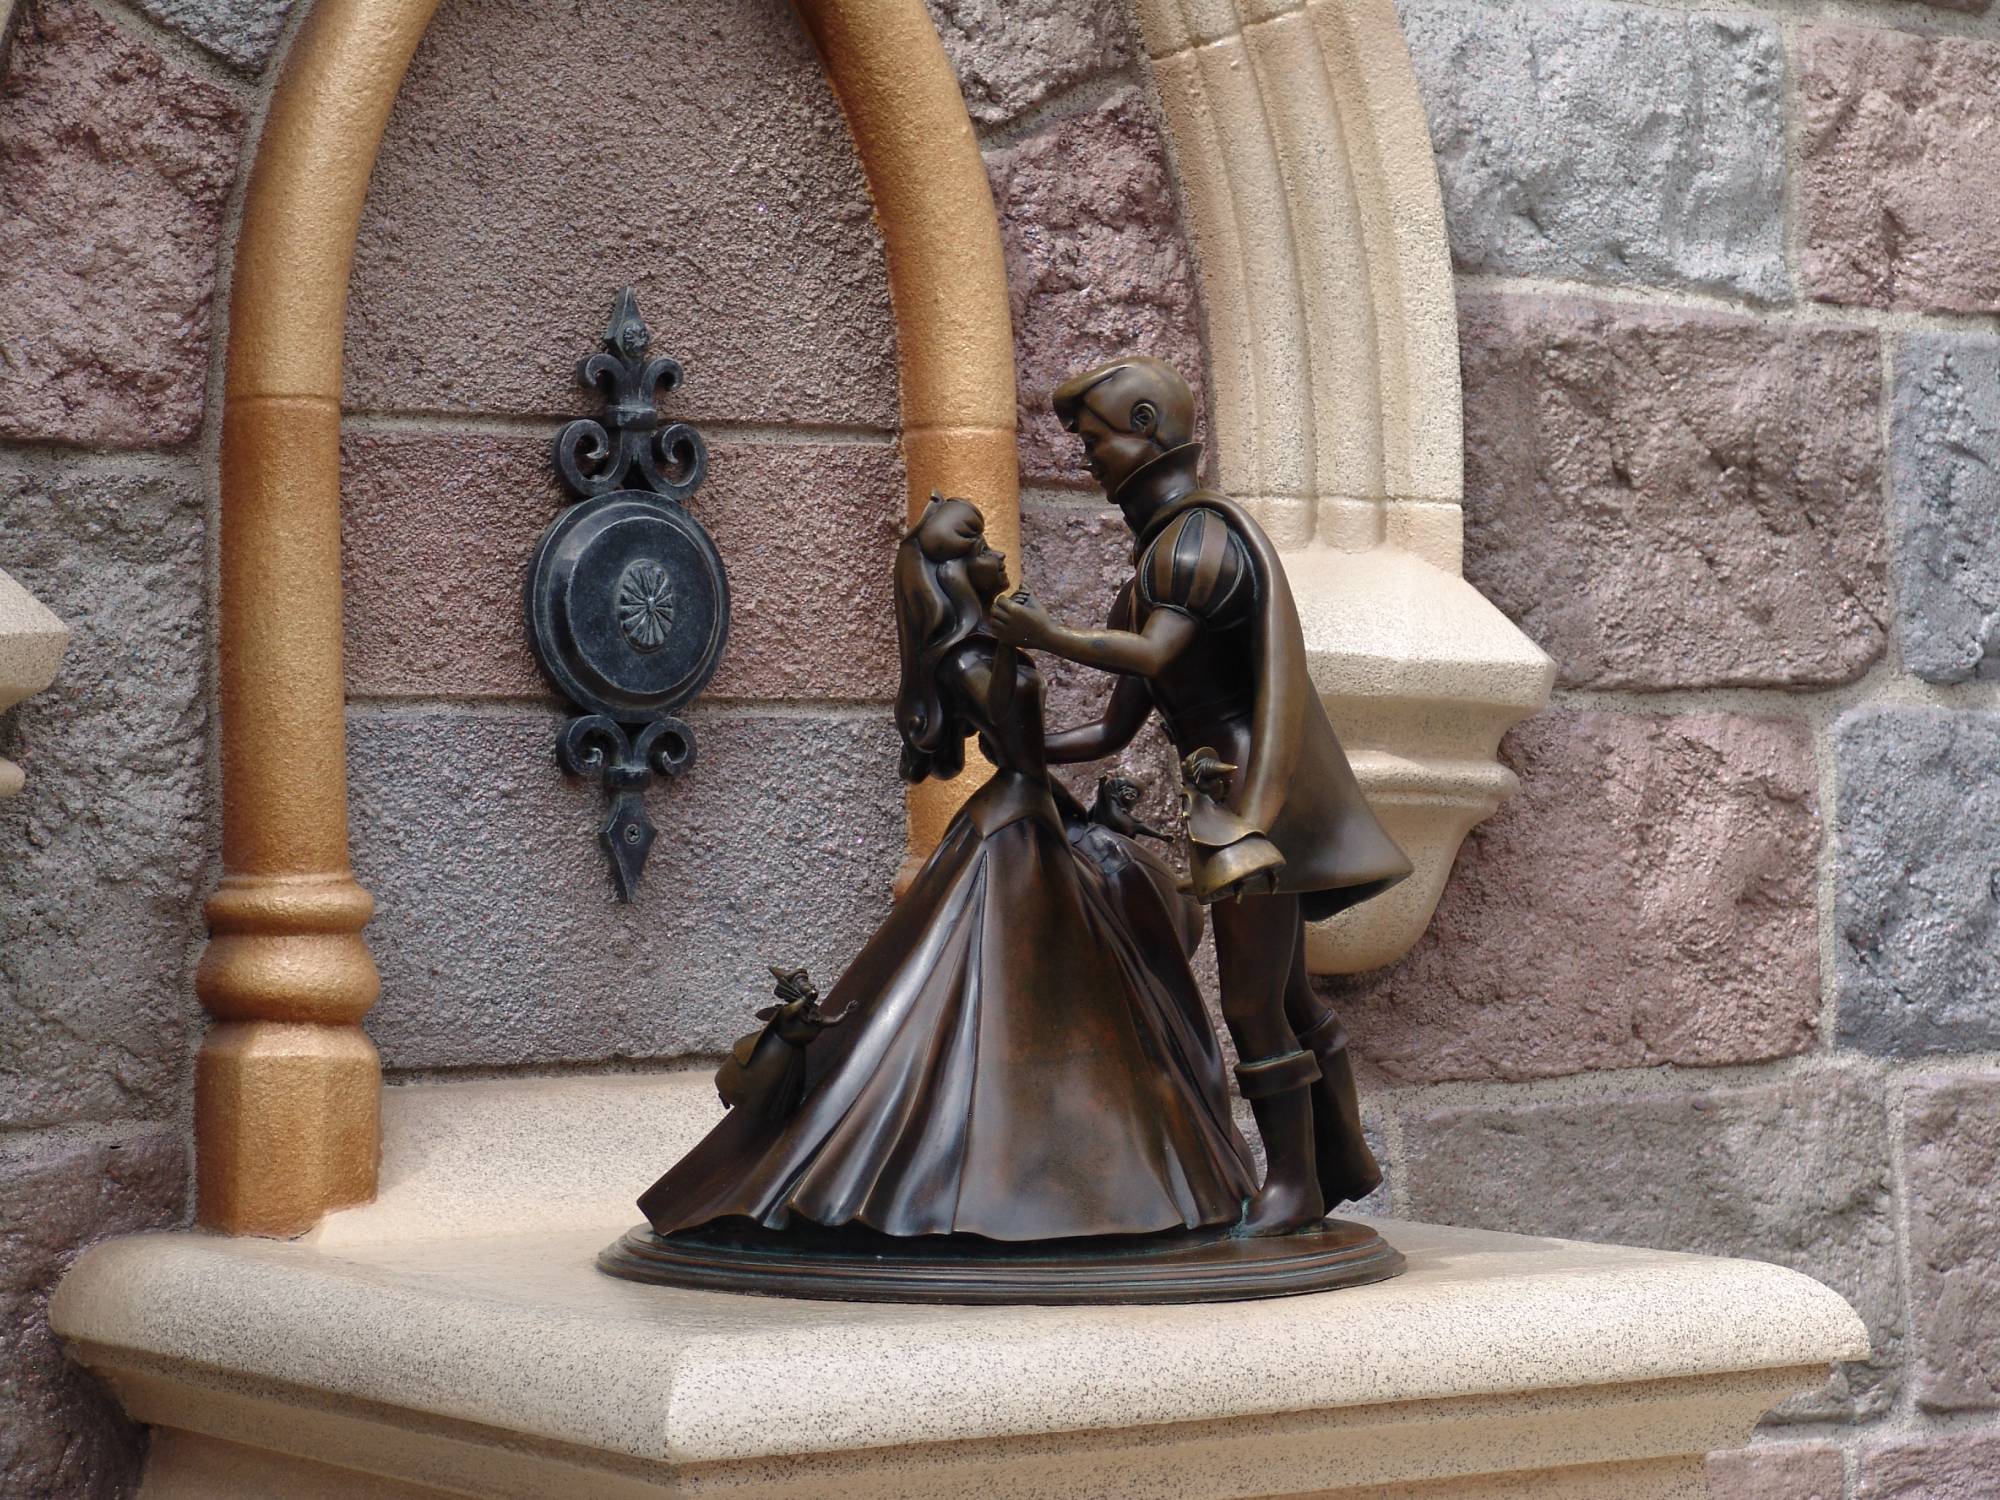 Disneyland - Sleeping Beauty Castle detail